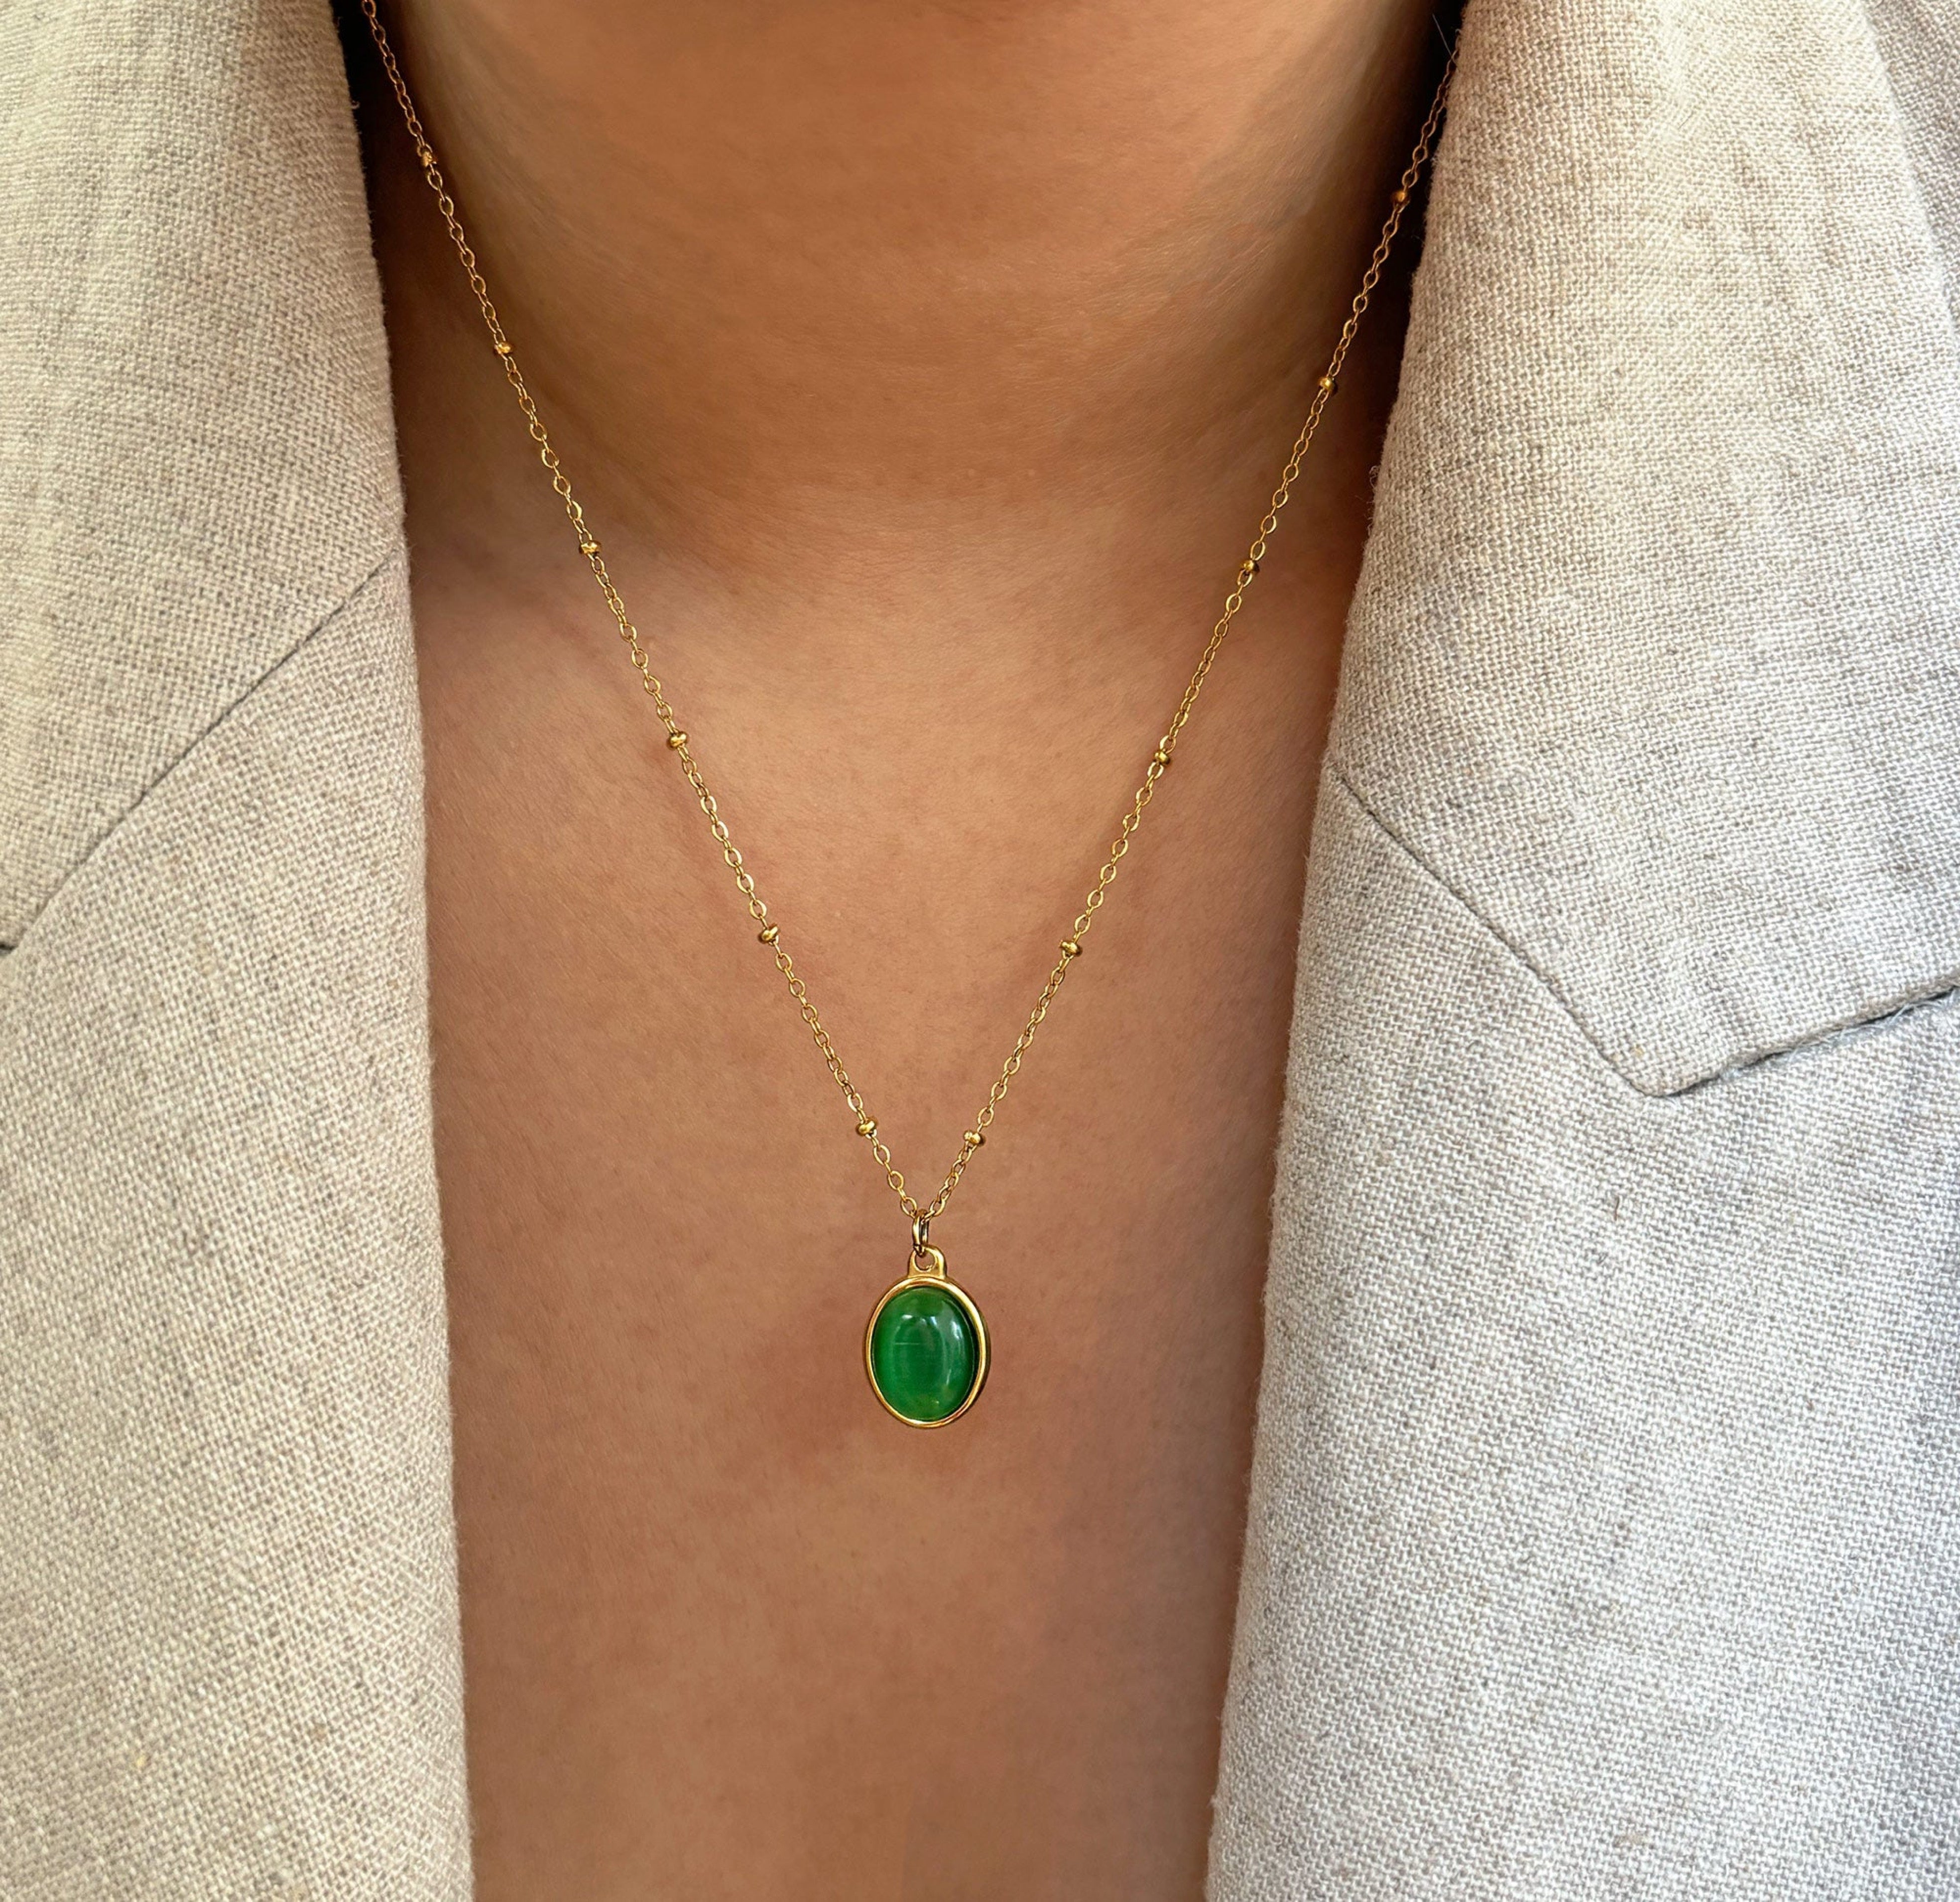 green cats eye oval pendant necklace waterproof jewelry